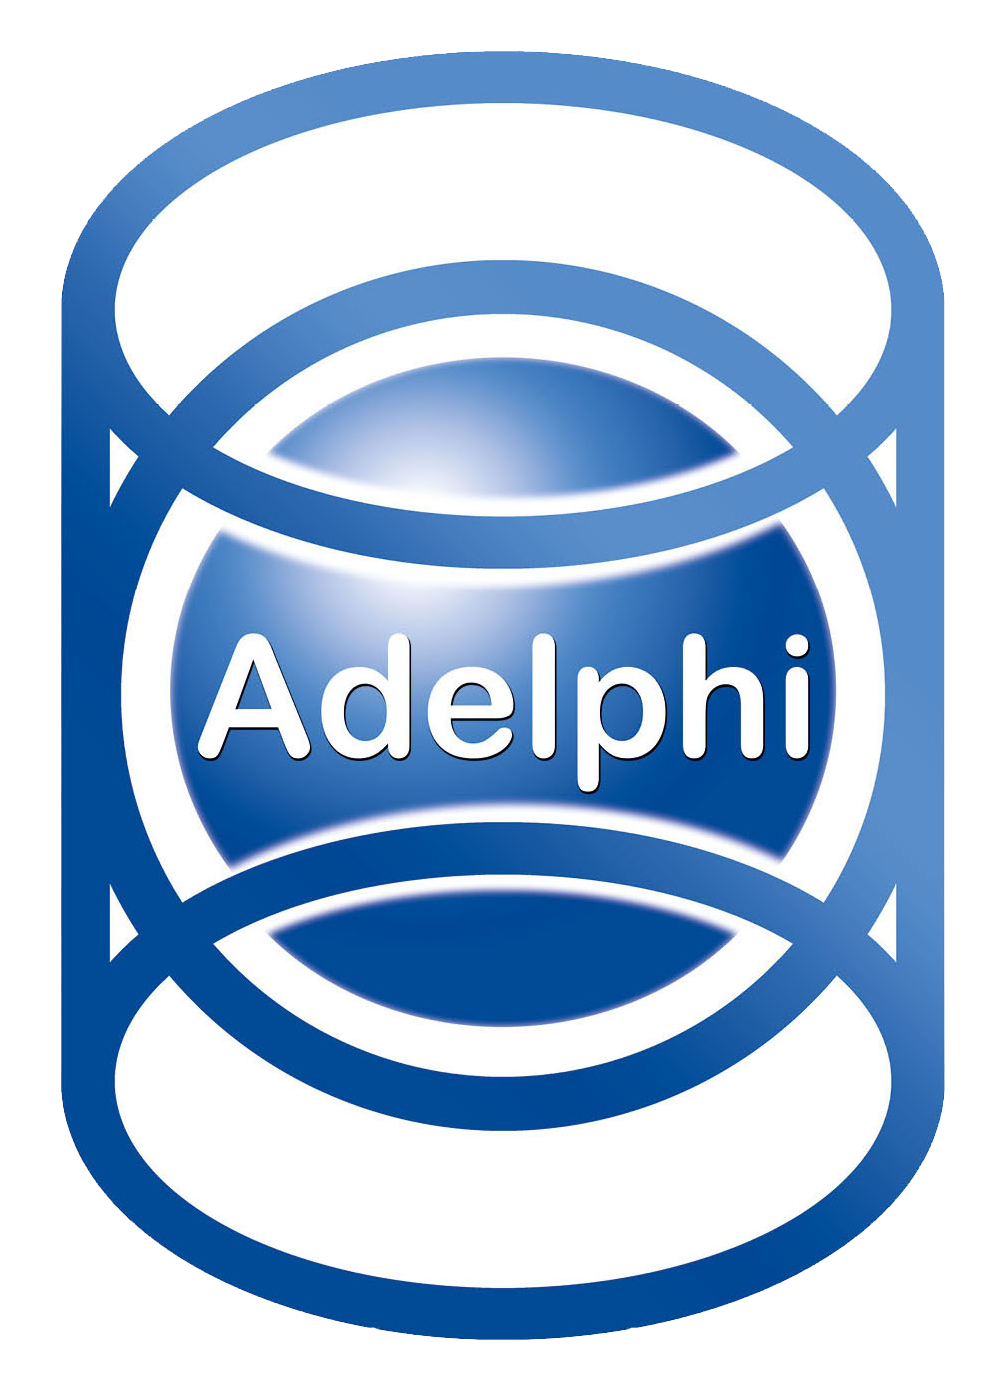 Adelphi